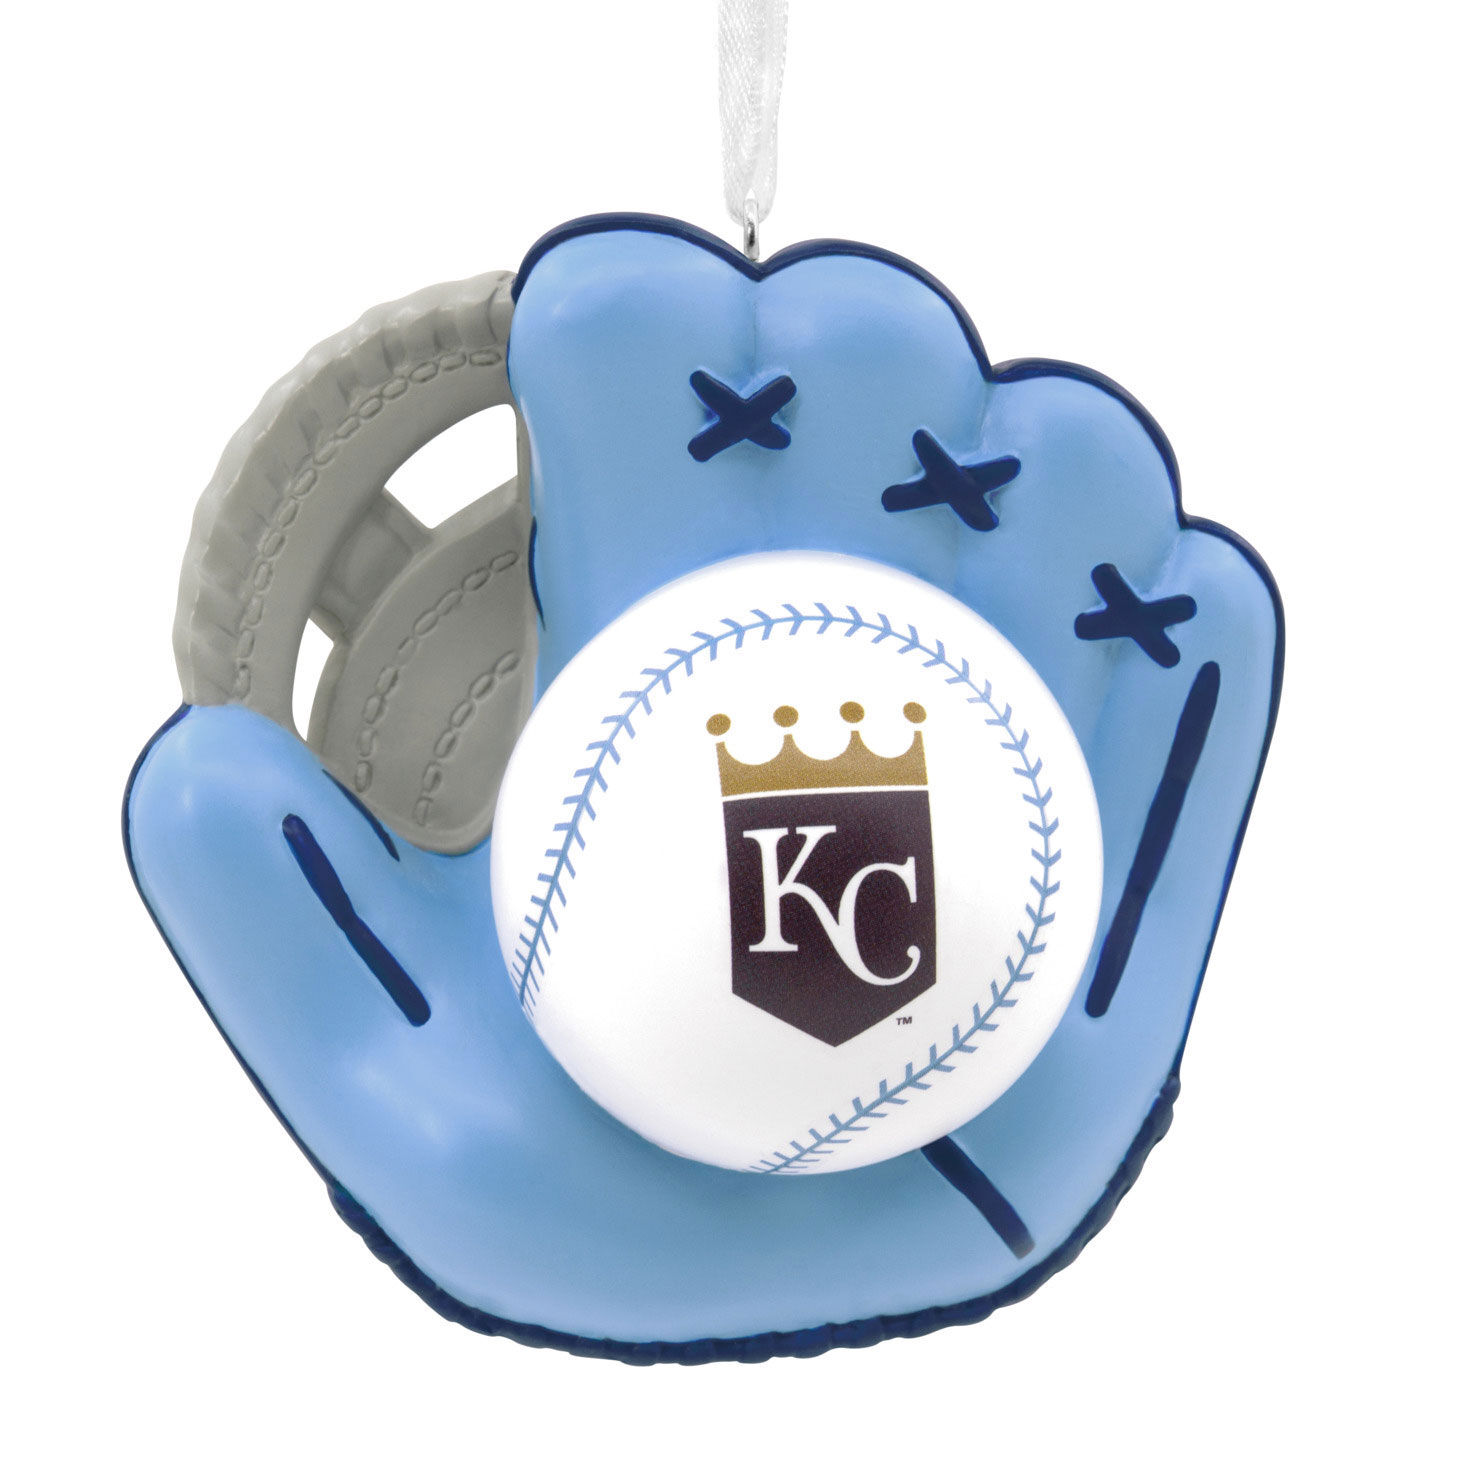  Hallmark 1595QSR1575 MLB Major League Baseball Kansas City Royals  Jersey Keepsake Christmas Ornaments : Home & Kitchen